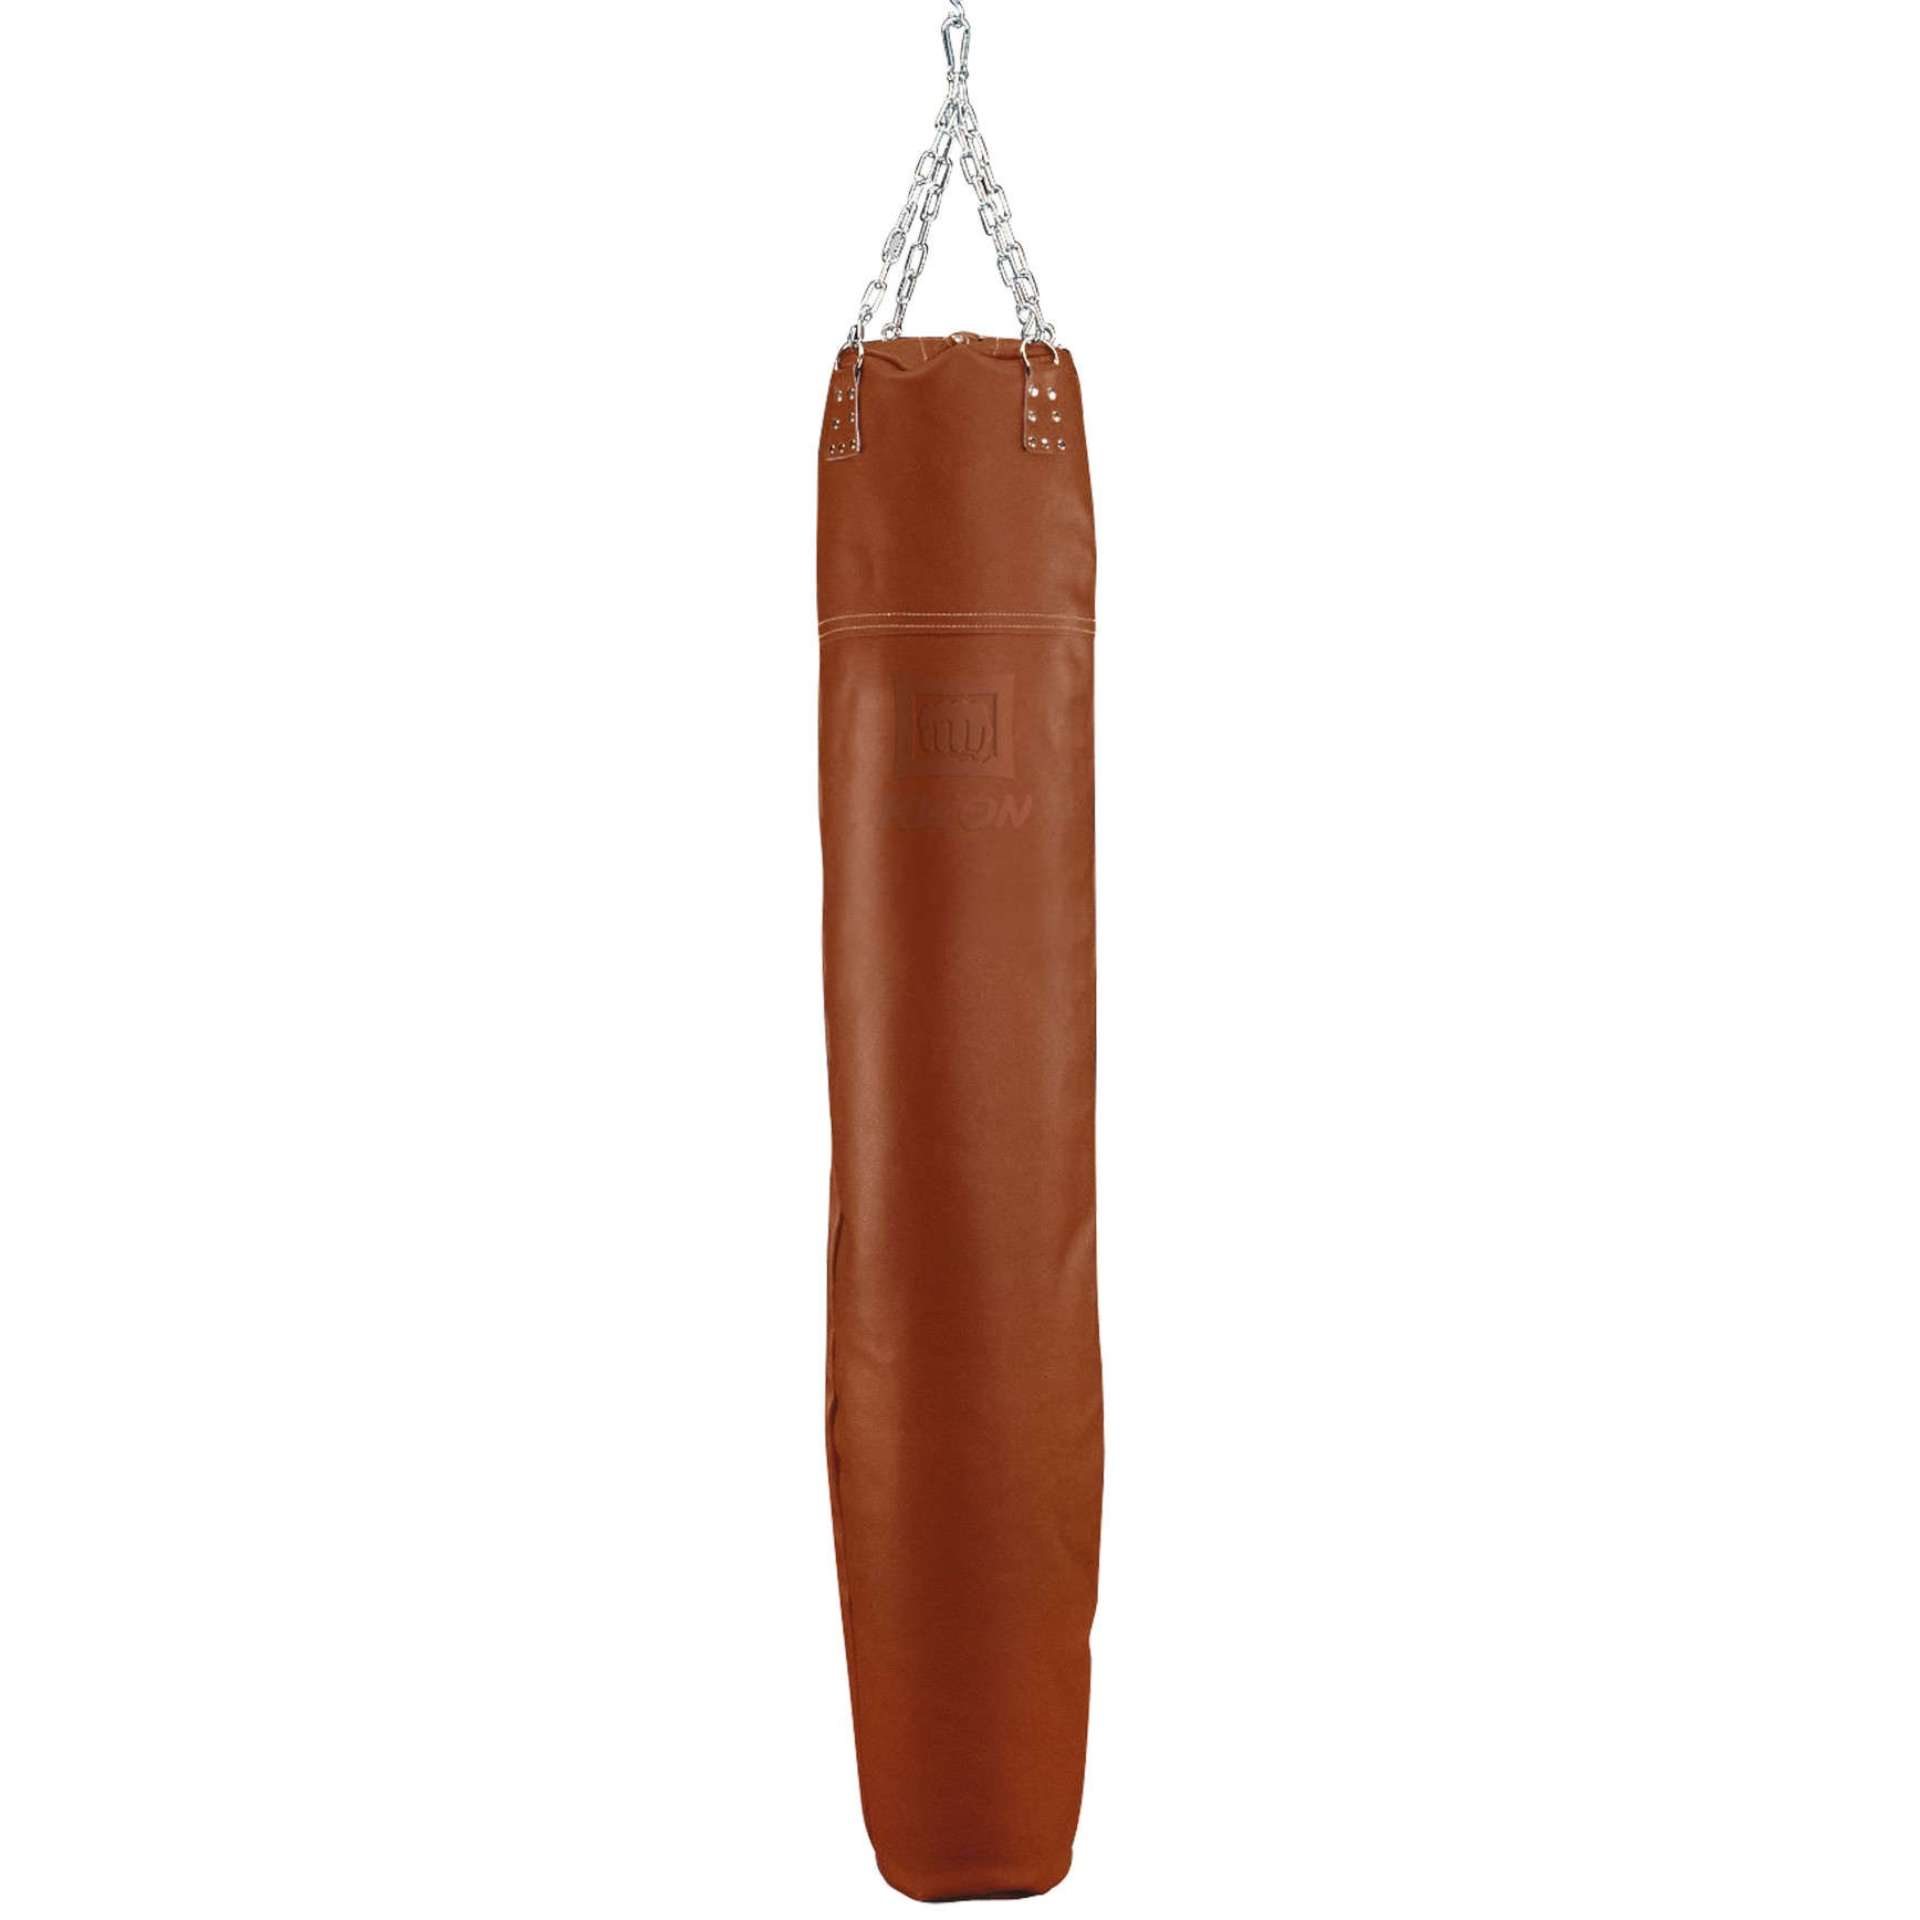 Lowkickstange Leder, ungefüllt, ca. 180 cm